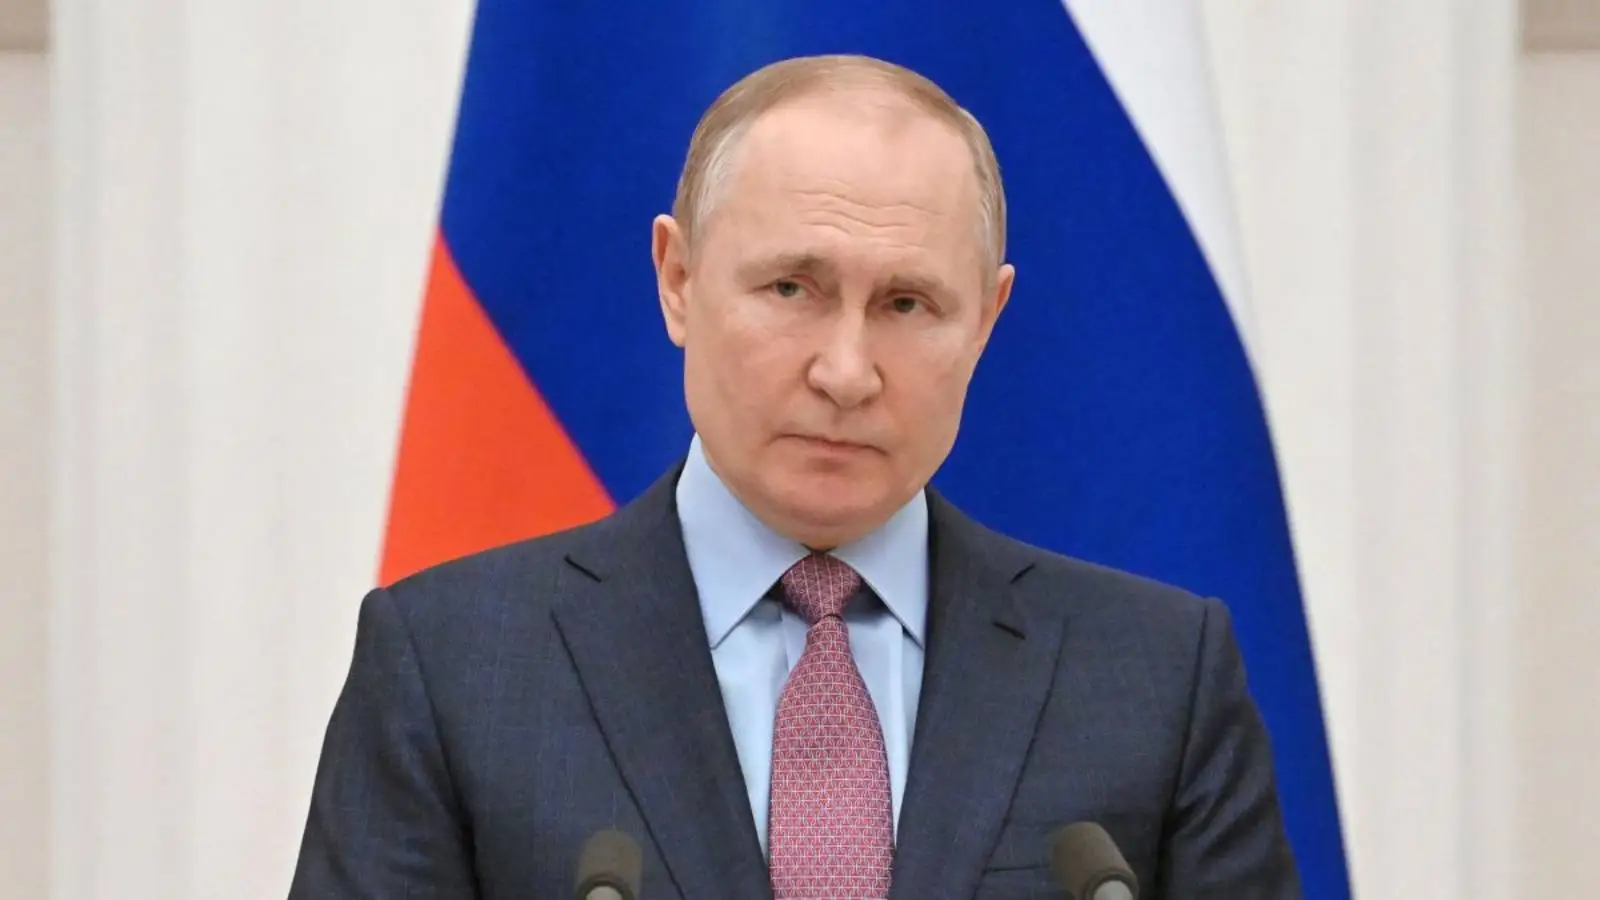 Vladimir Putin Continua sa Ceara Cucerirea Intregii Regiuni Donbas din Ucraina